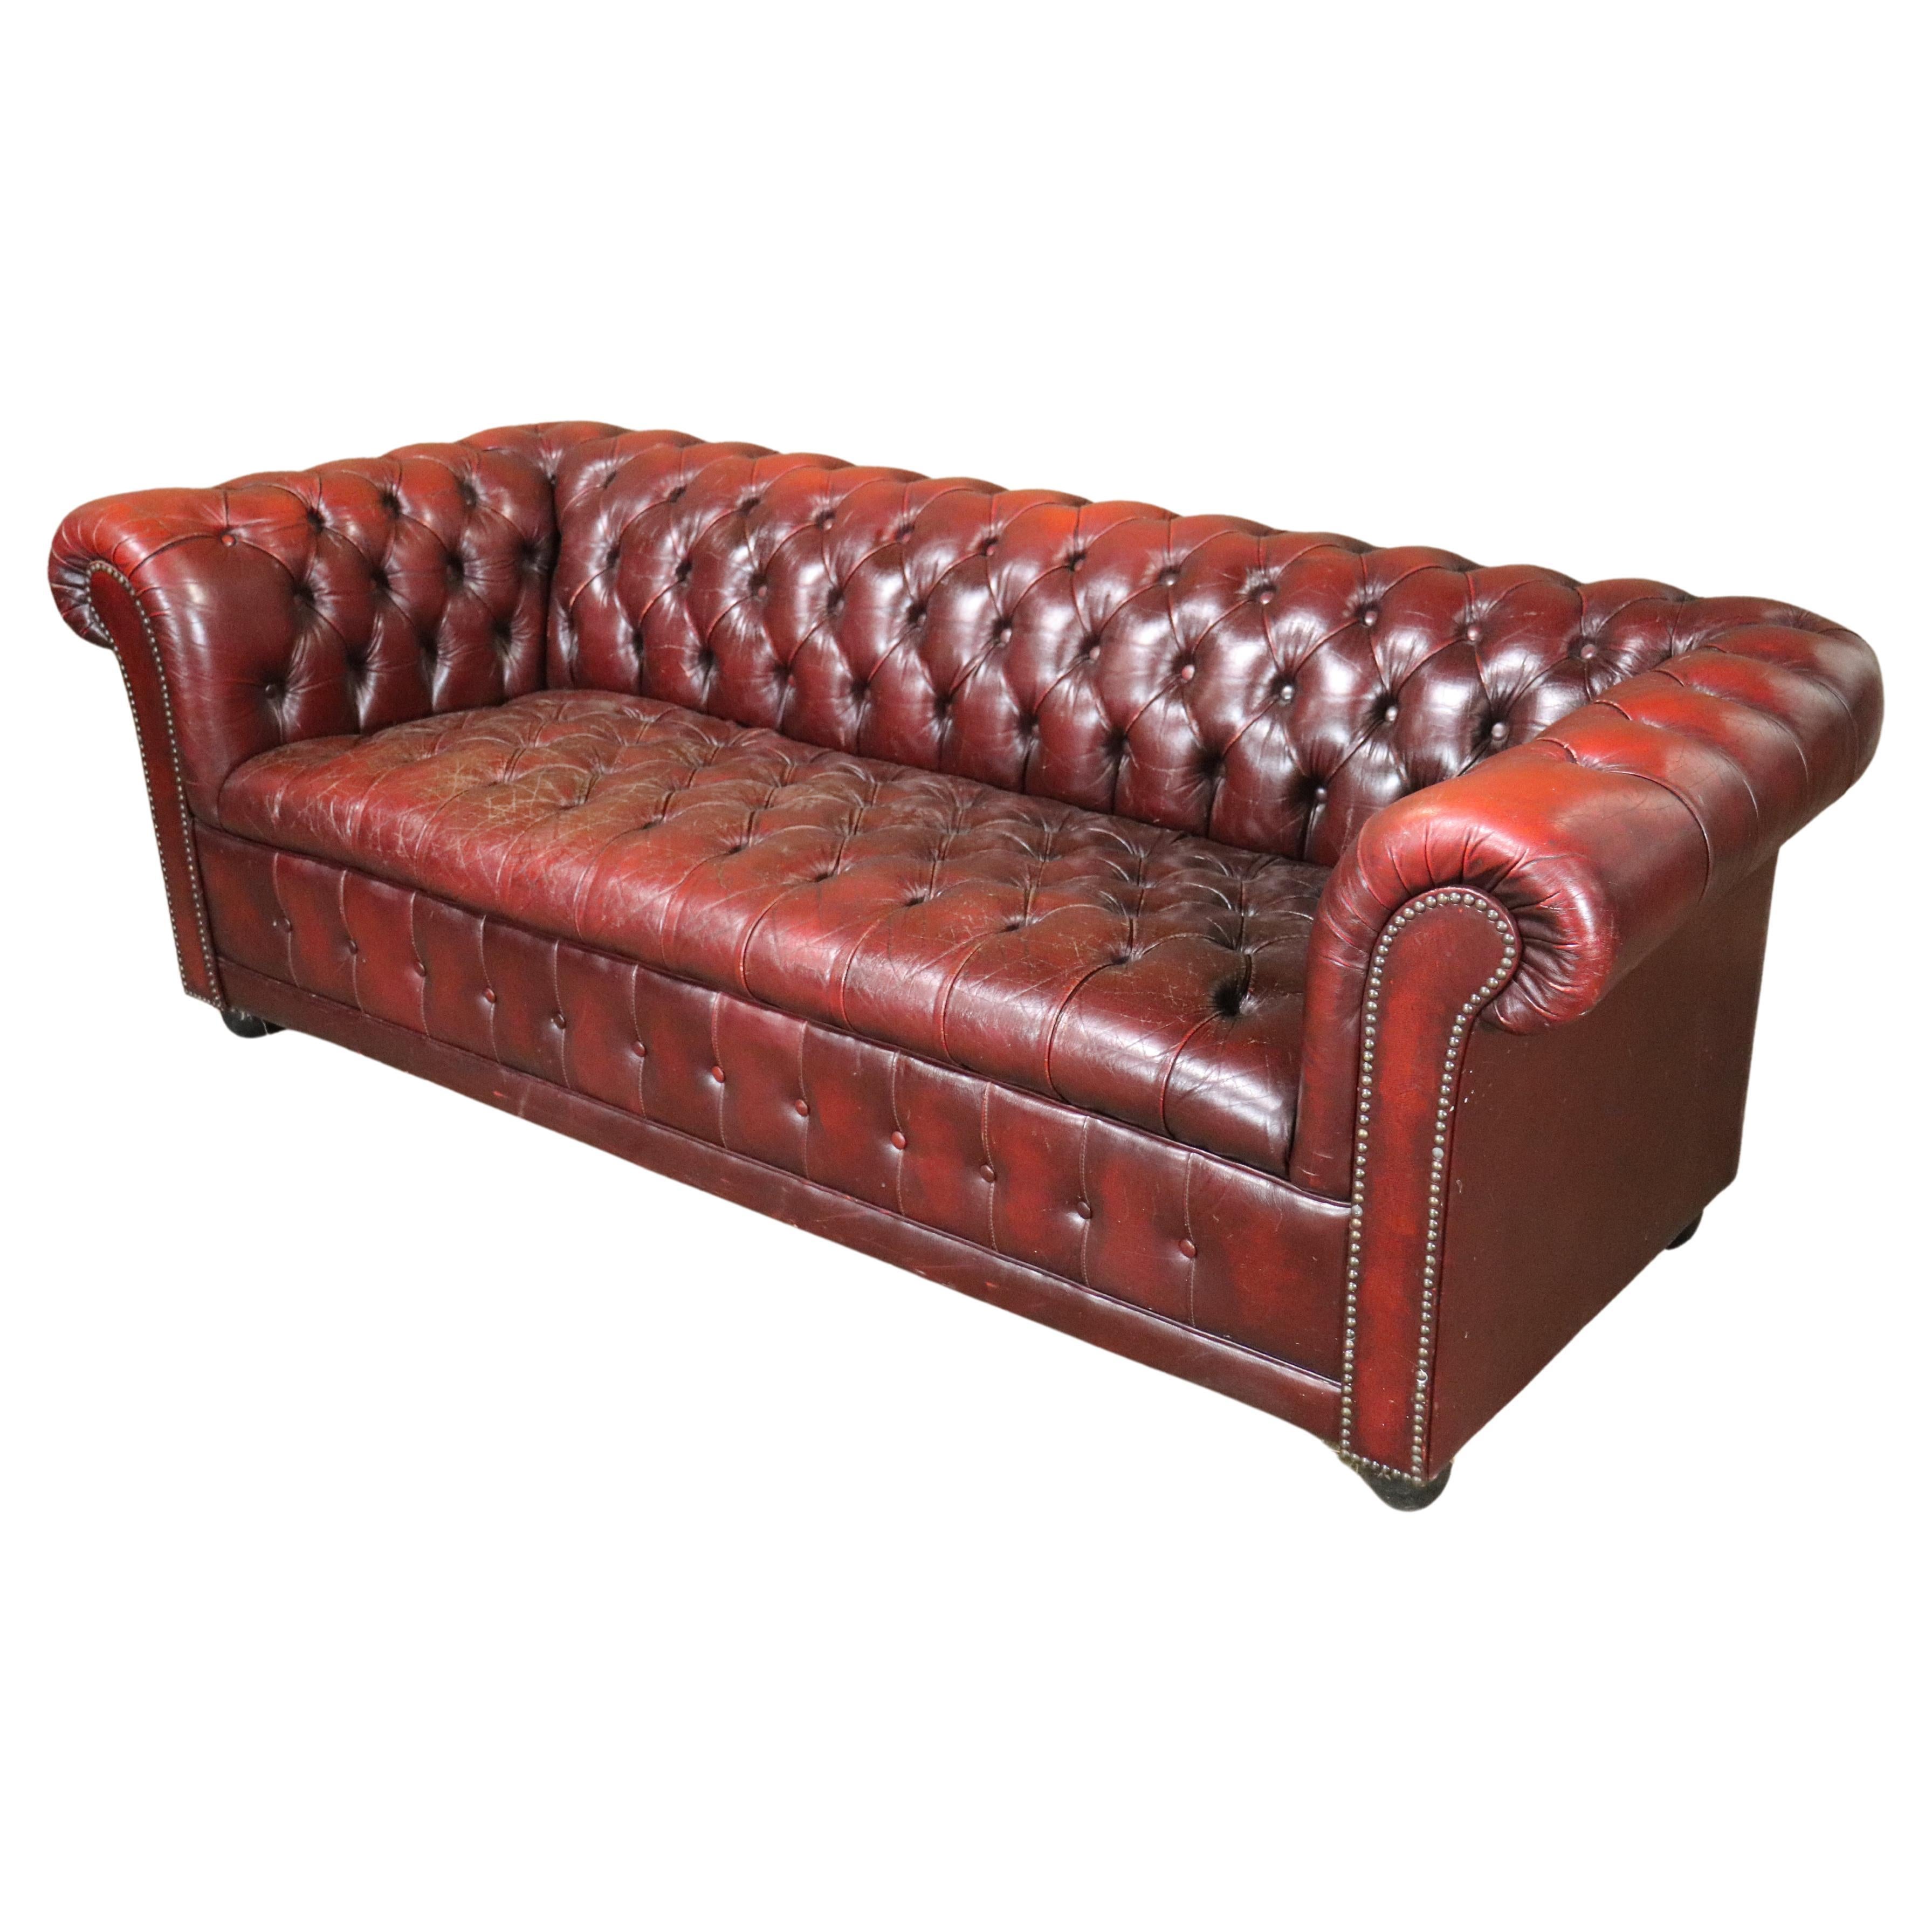 Burgundy Chesterfield Sofa